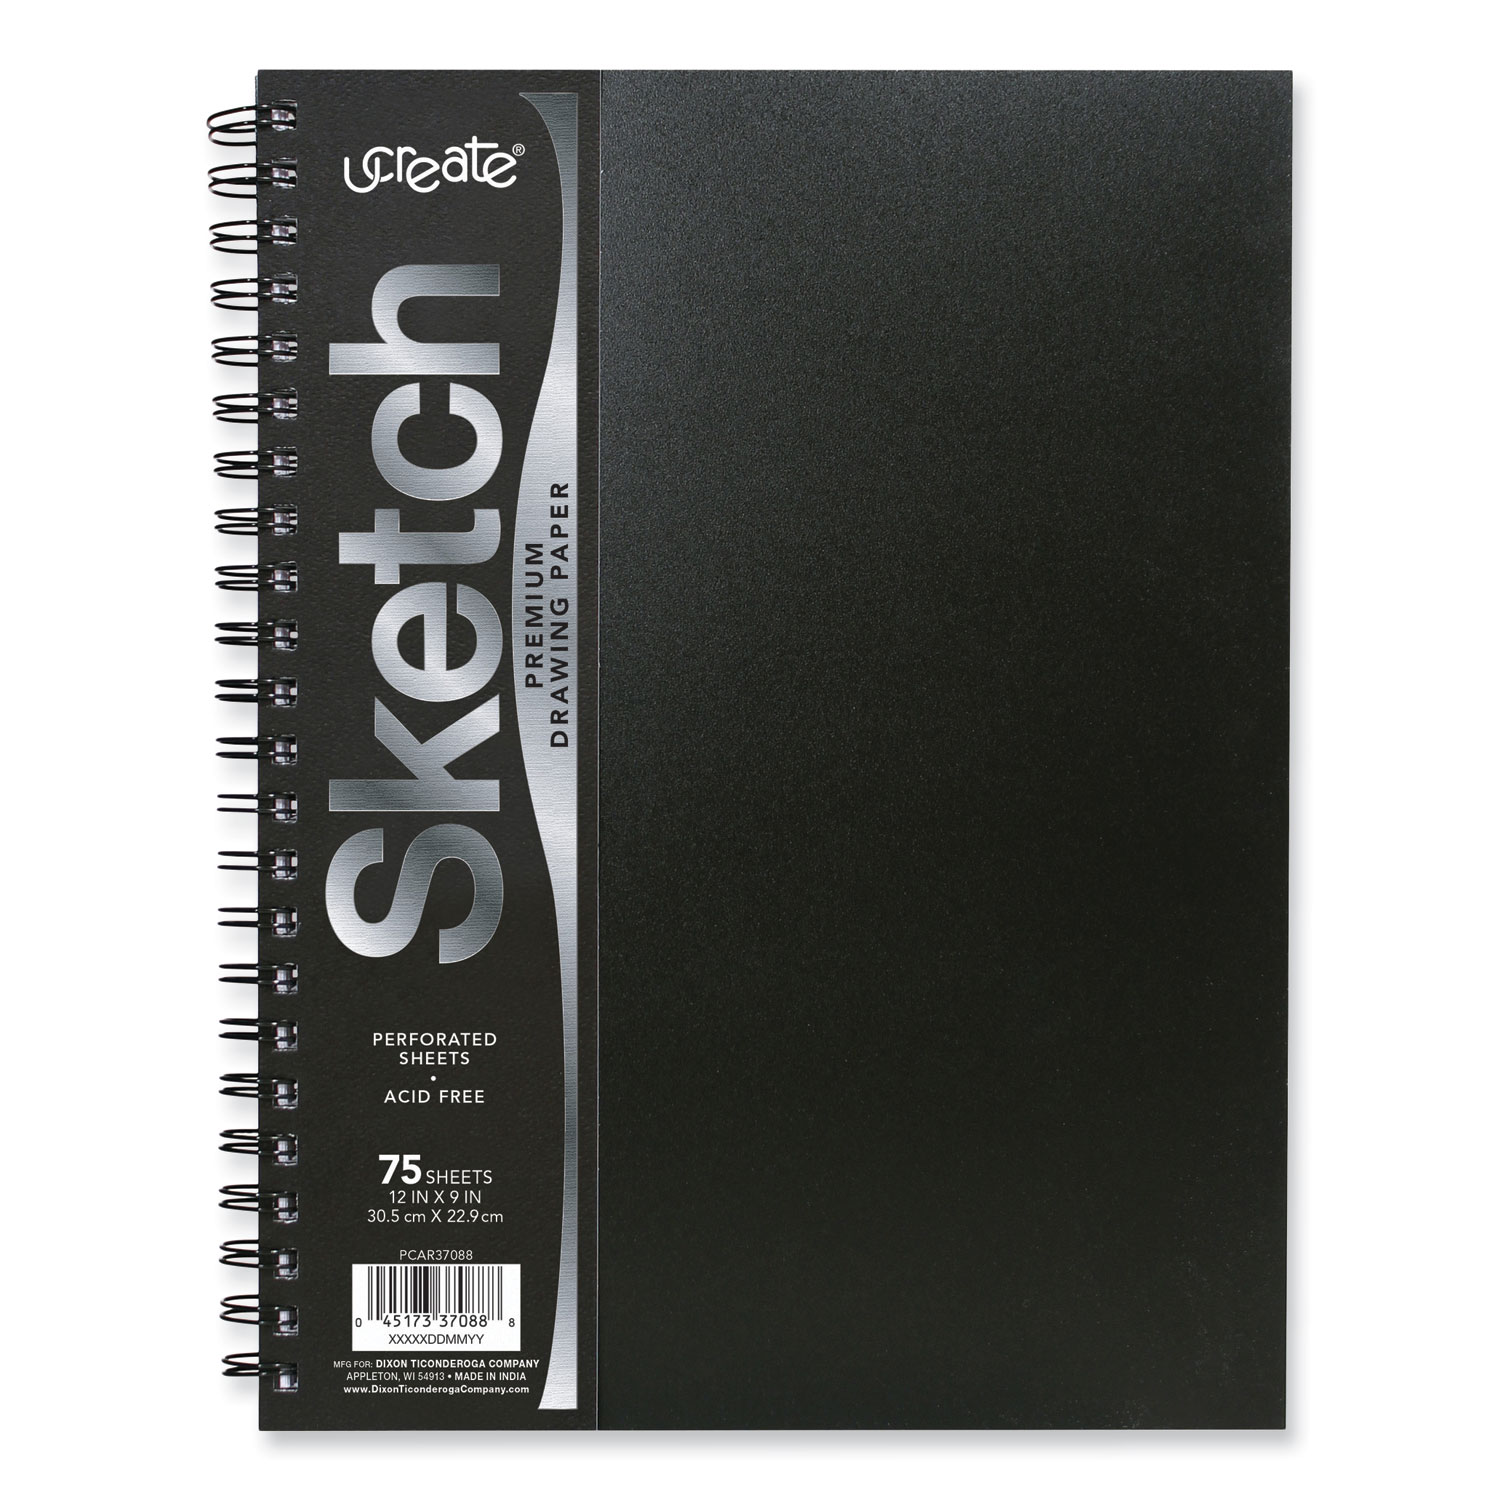 BIG sketchbook flipthrough! 3 sketchbooks